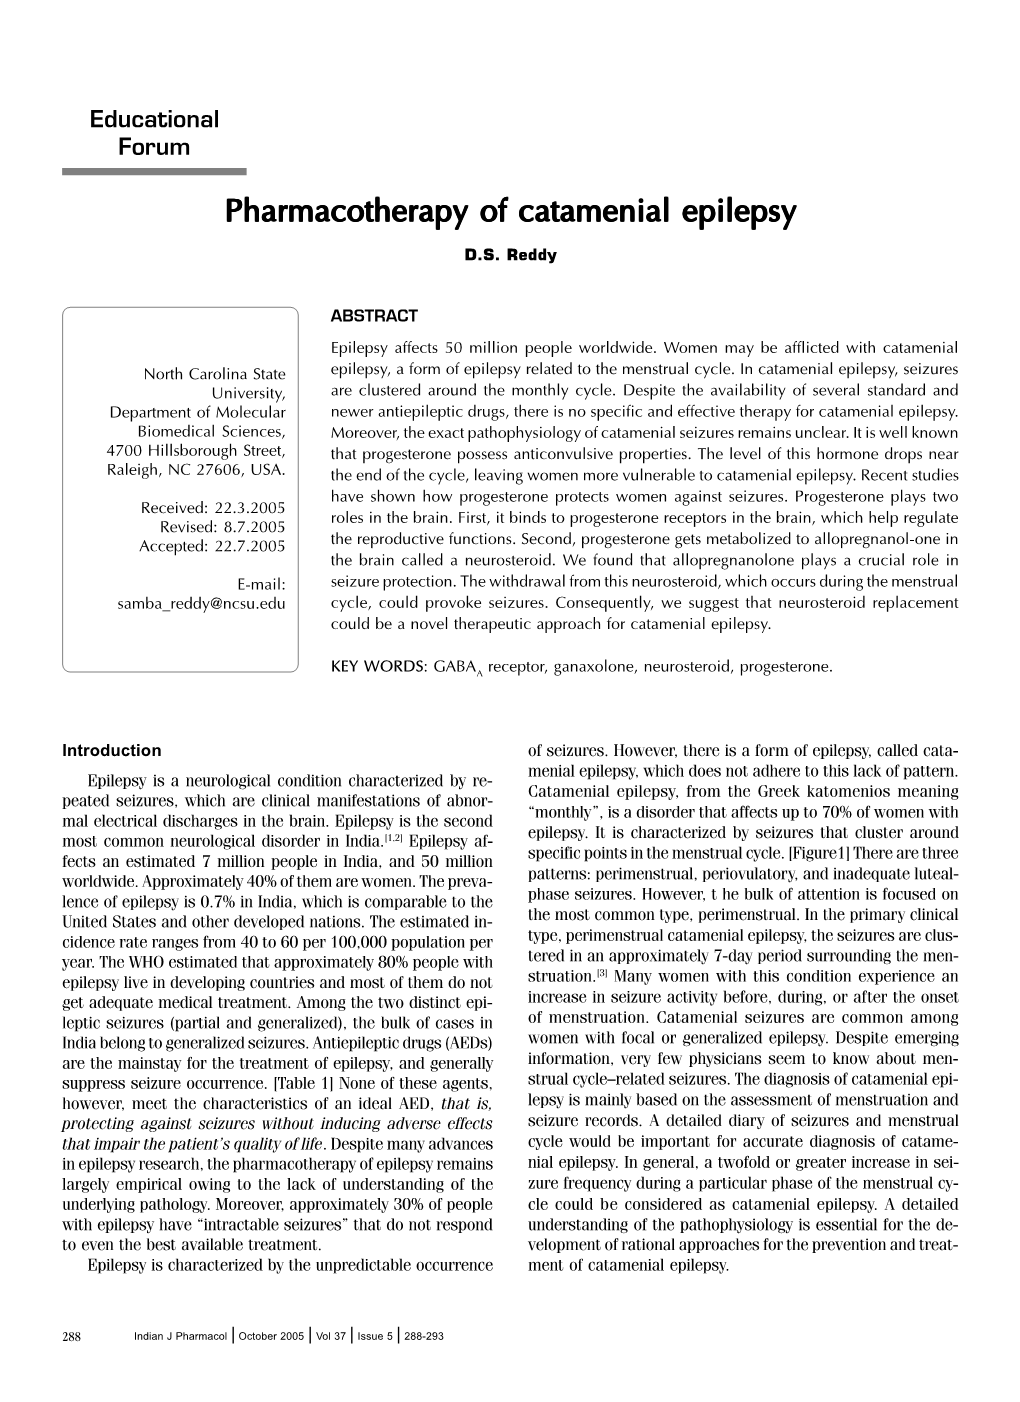 Pharmacotherapy of Catamenial Epilepsy